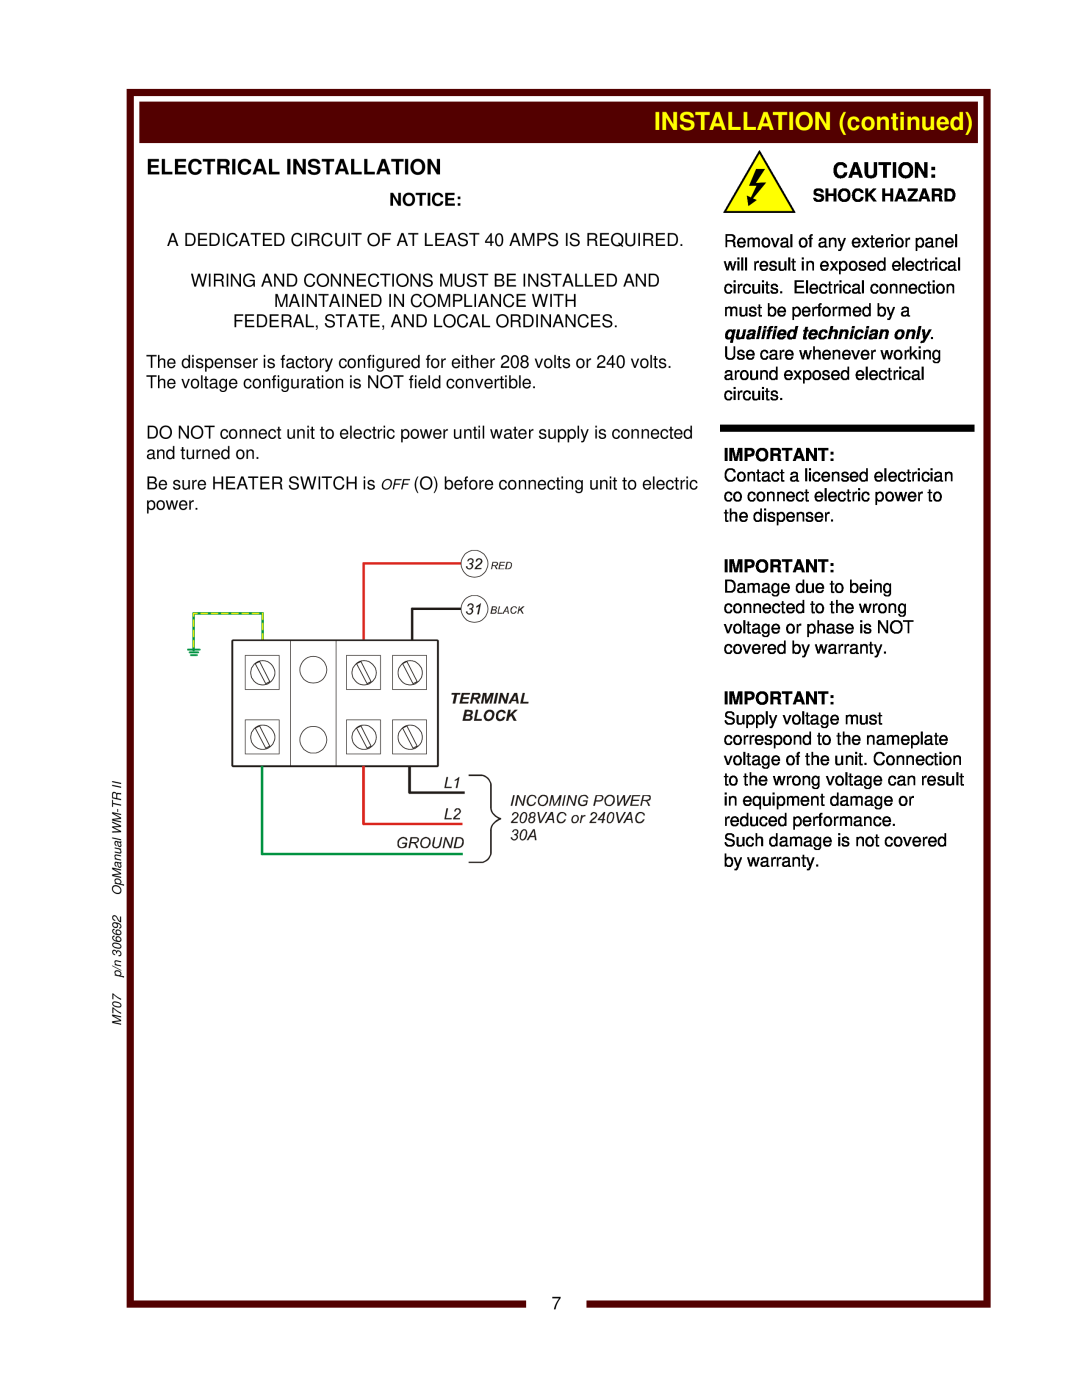 Wells WM-TR II operation manual Electrical Installation, Shock Hazard, INSTALLATION continued 